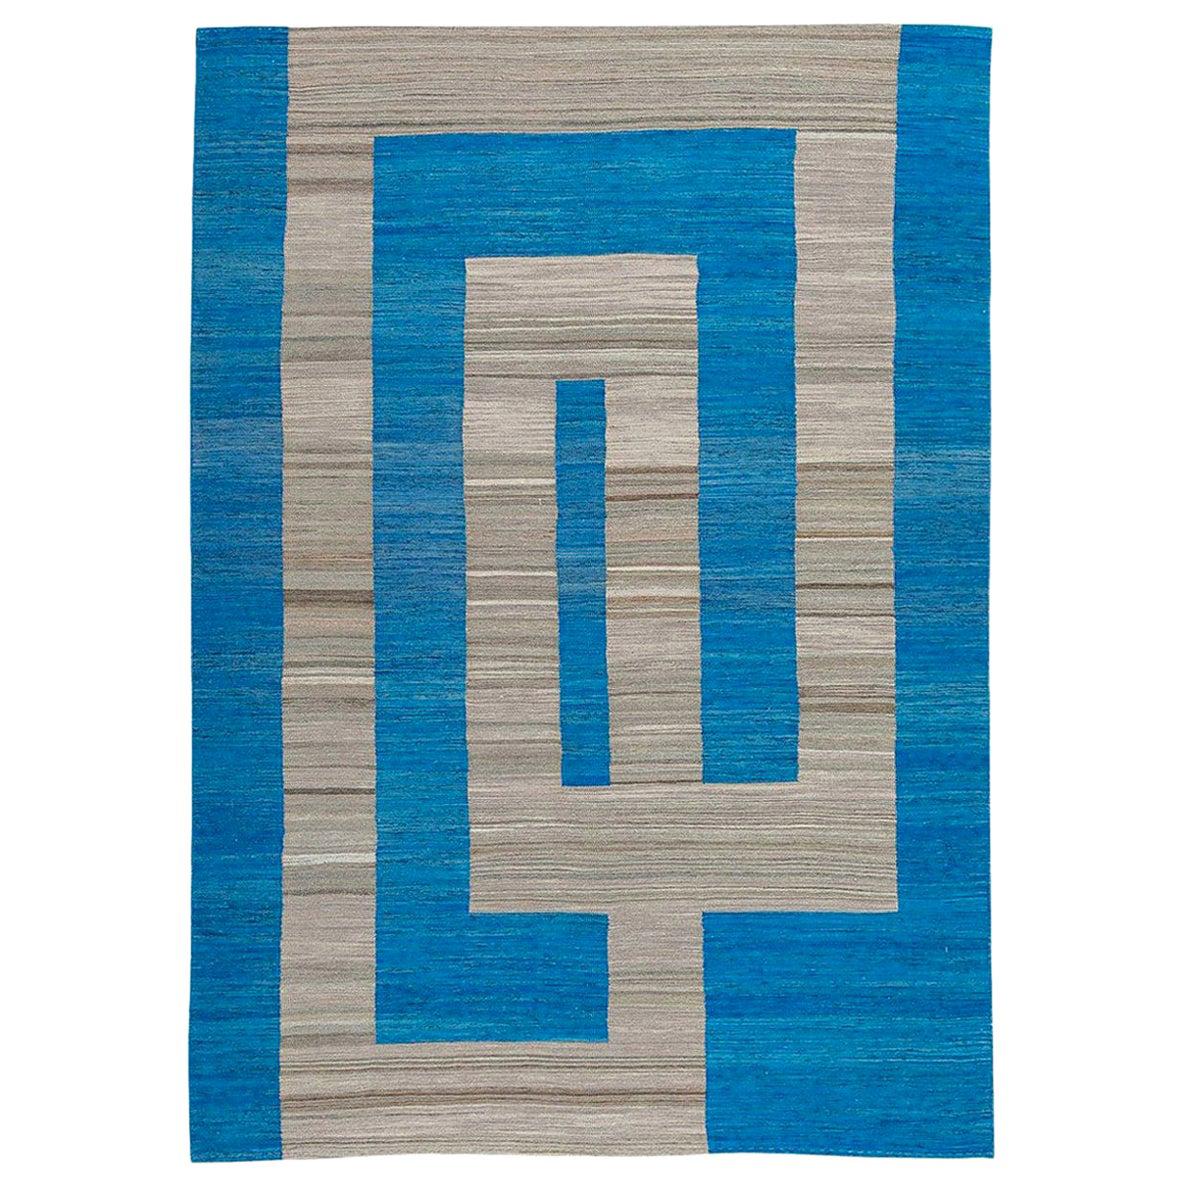 Handmade Flat-Weave Kilim Blue and Gray Wool Geometrical Design. 2.90 x 2.05 m. For Sale